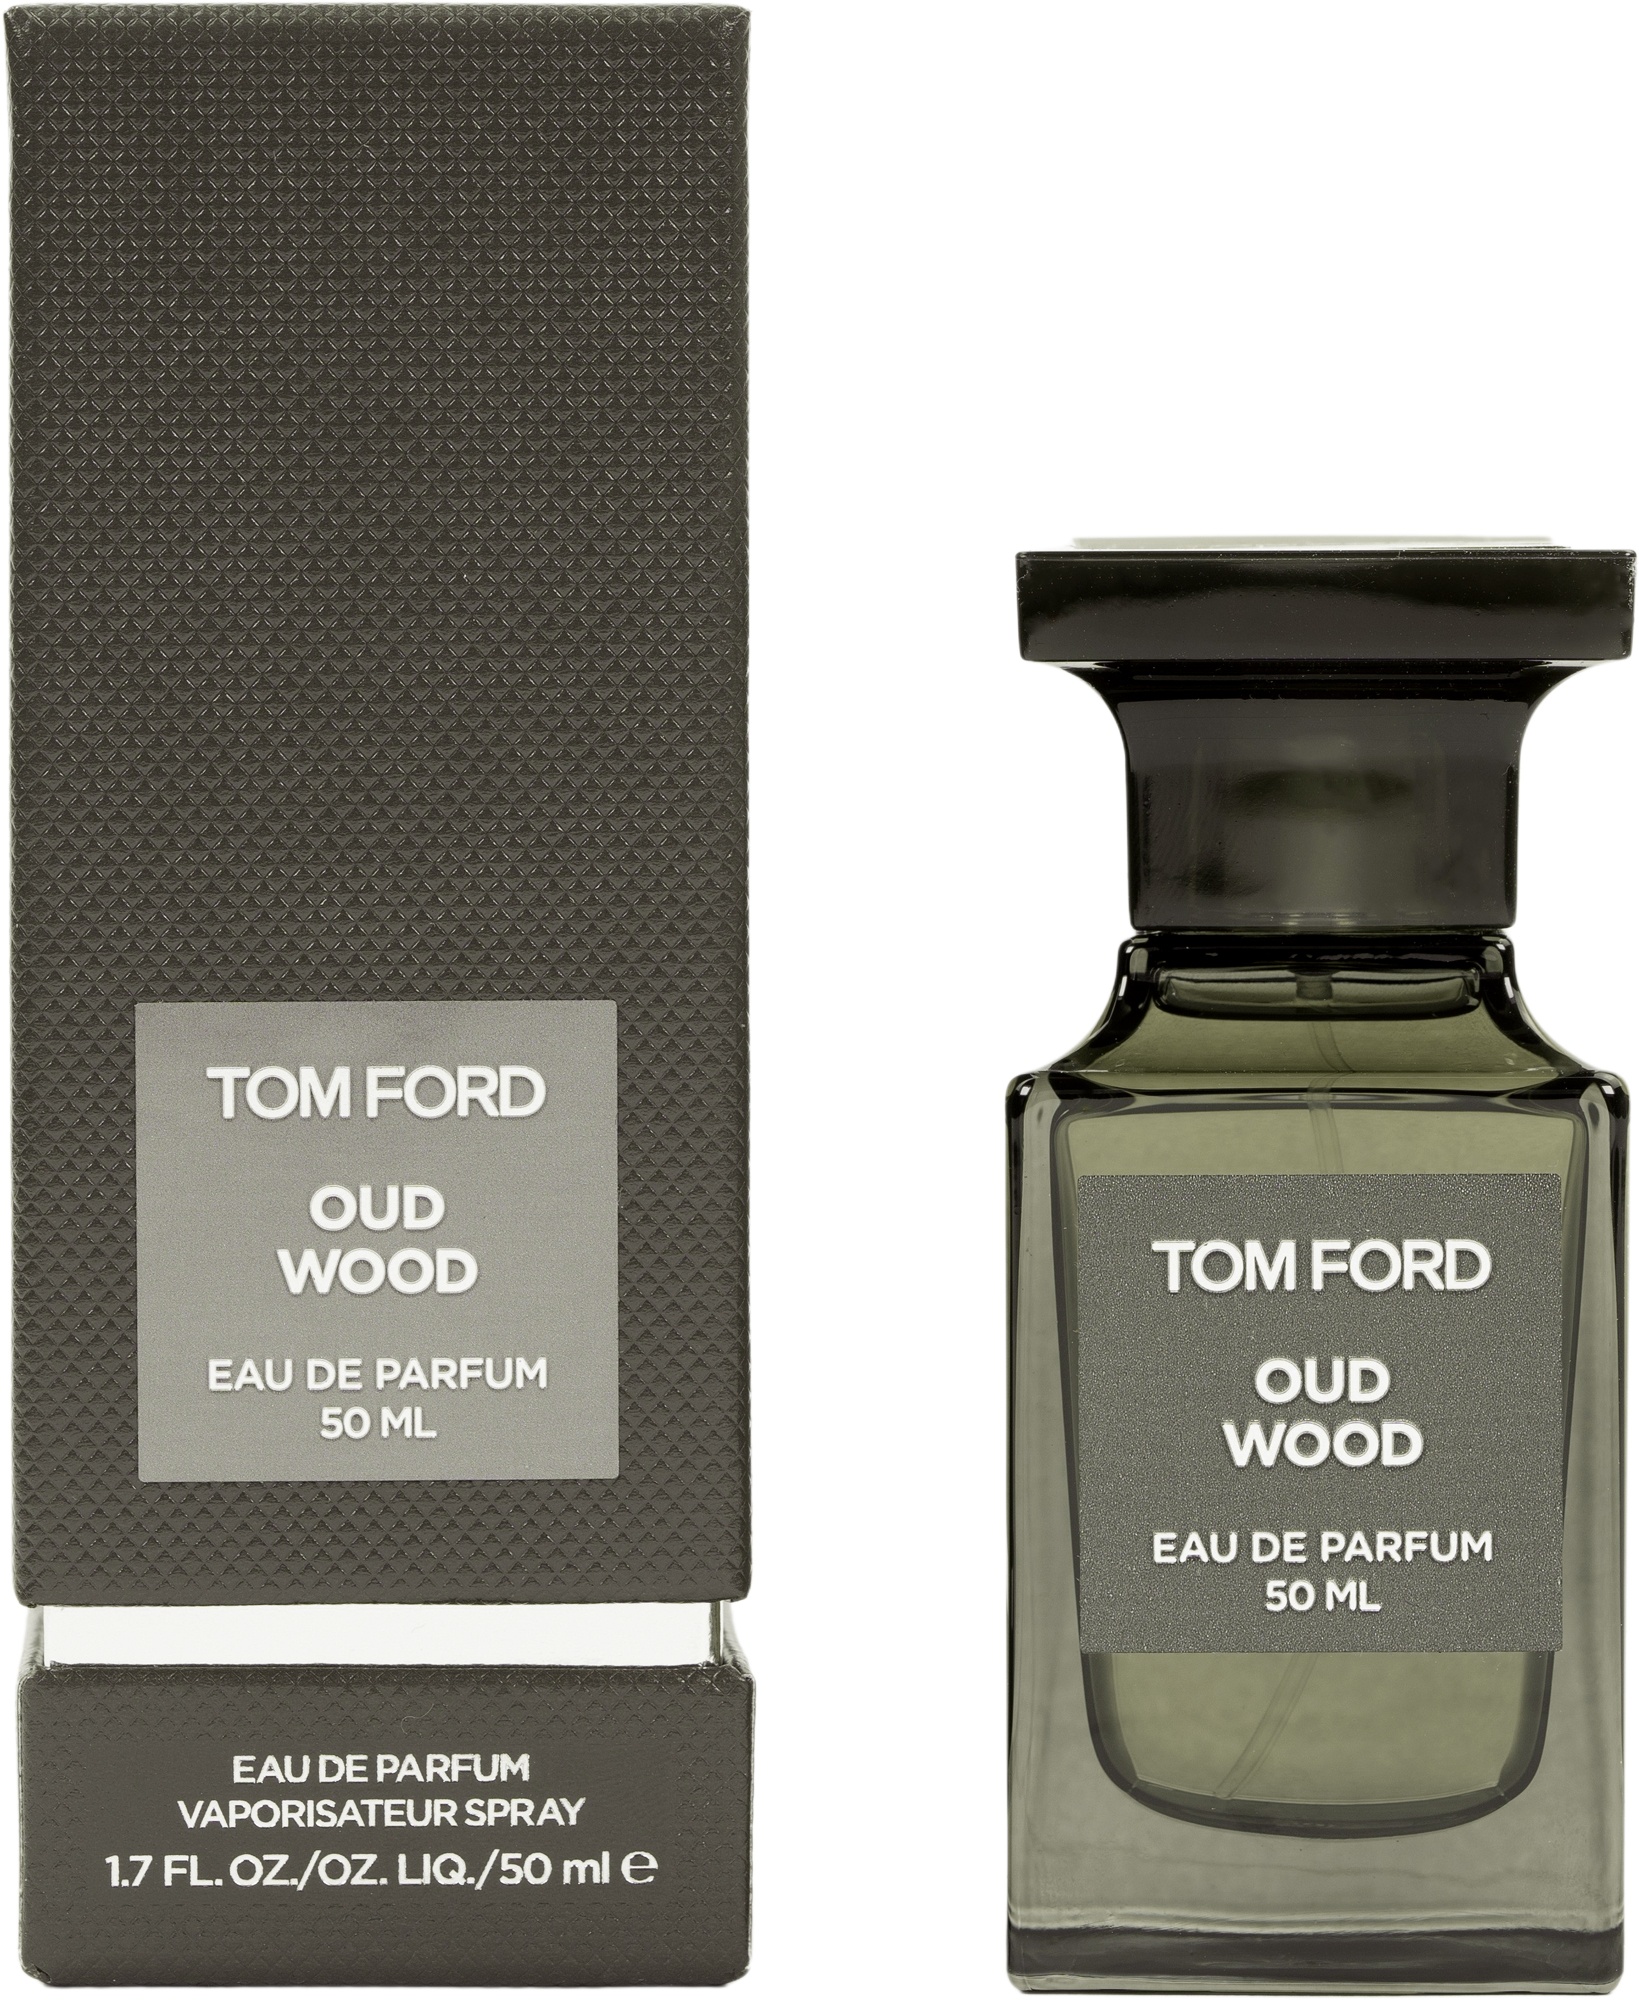 Bild von Oud Wood Eau de Parfum 50 ml